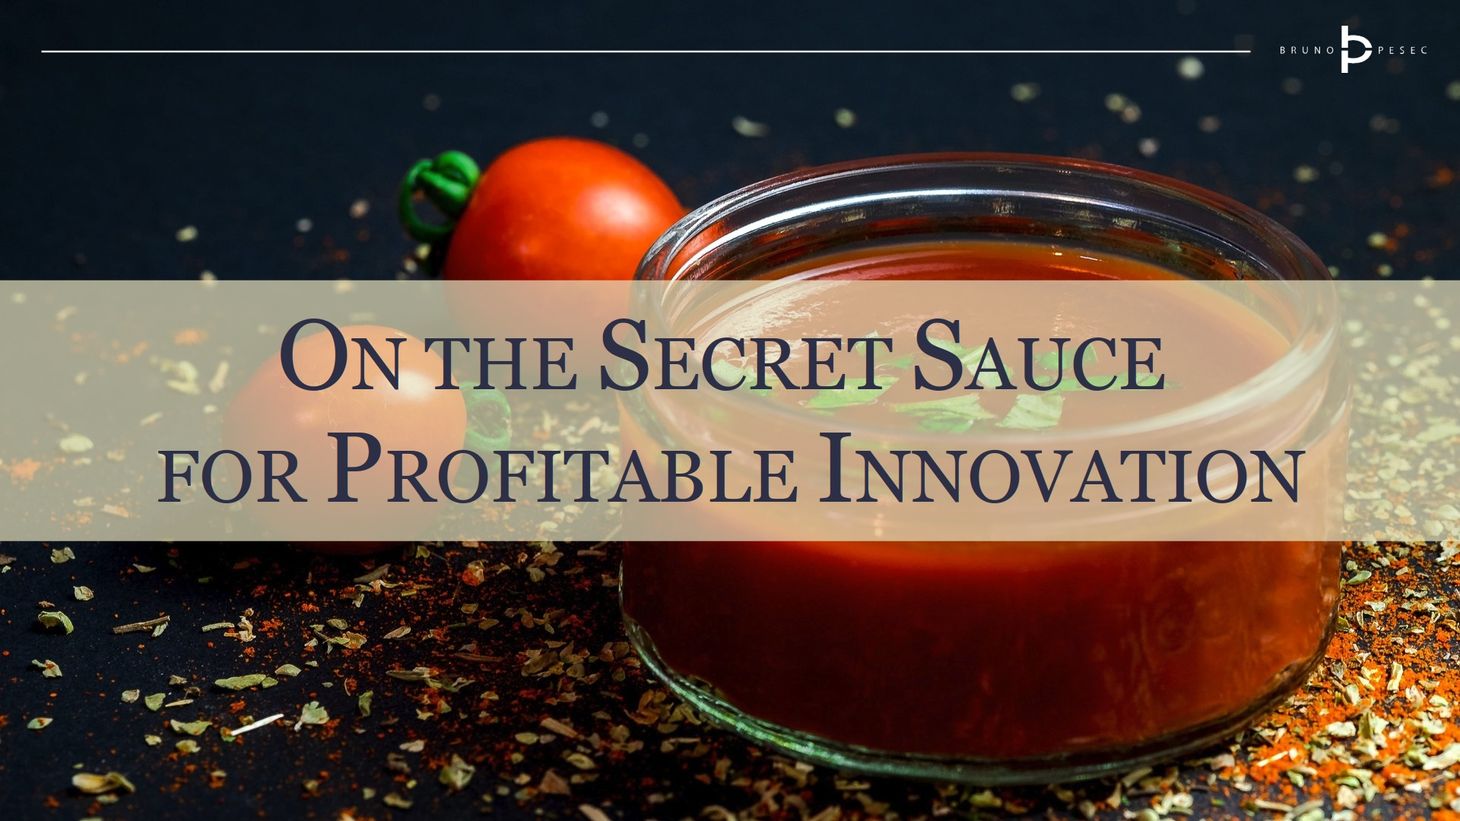 On the secret sauce for profitable innovation